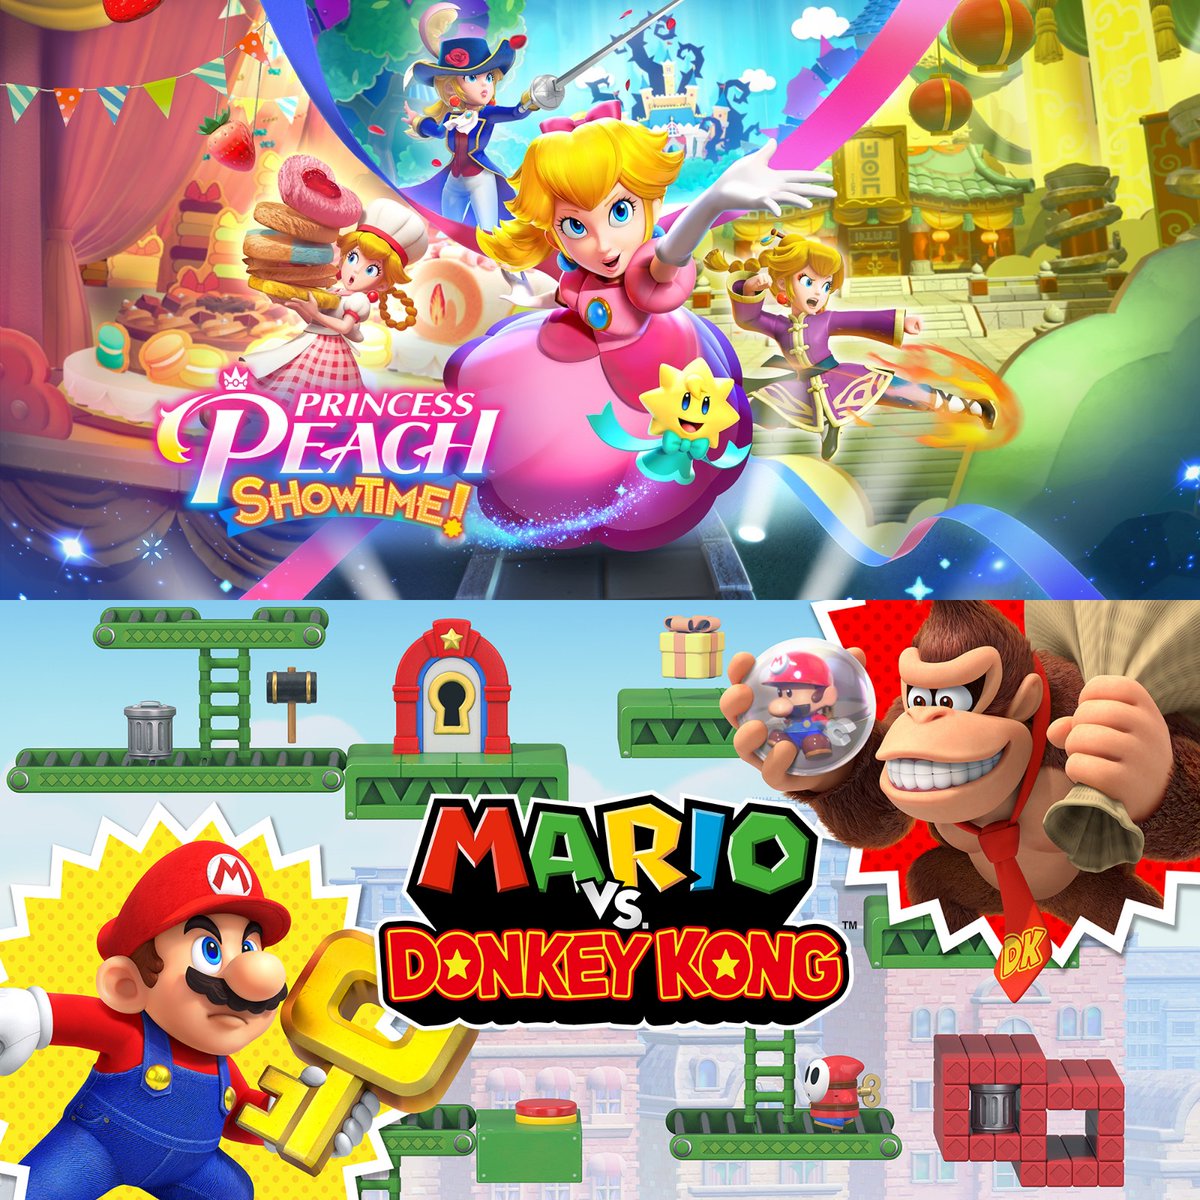 Princess Peach Showtime and Mario vs. Donkey Kong Remake are both million sellers!

Princess Peach Showtime - 1.22m
Mario vs. Donkey Kong Remake - 1.12m